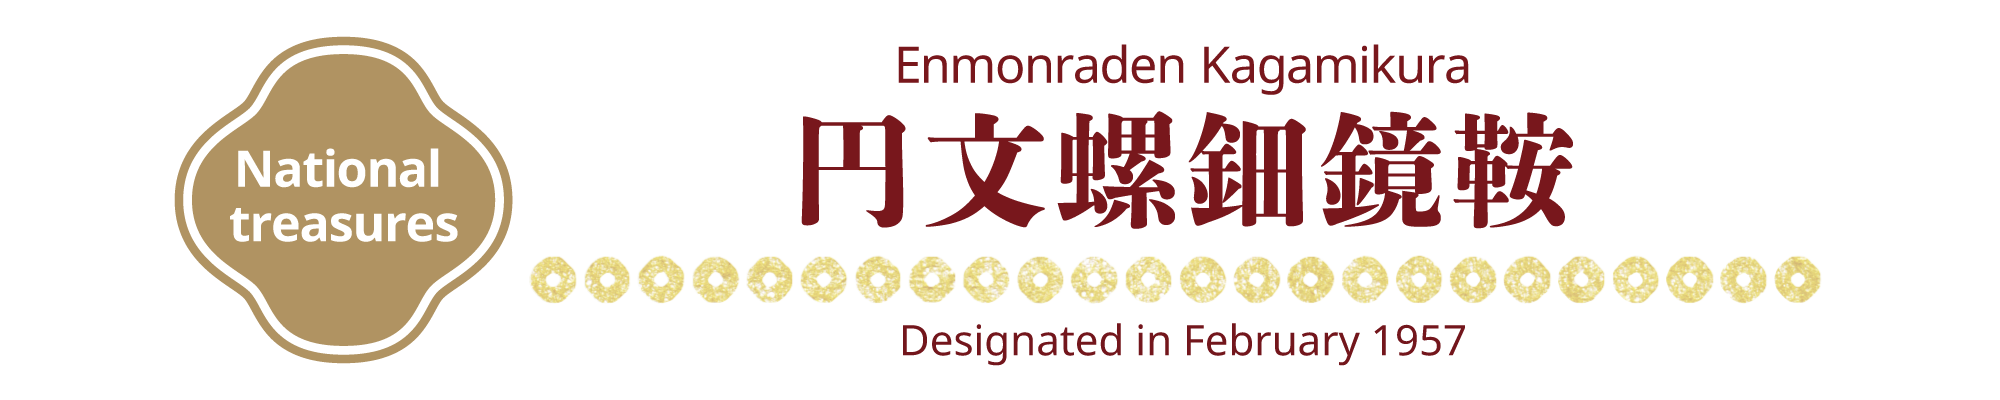 [National treasures] Enmonraden Kagamikura, Designated in February 1957